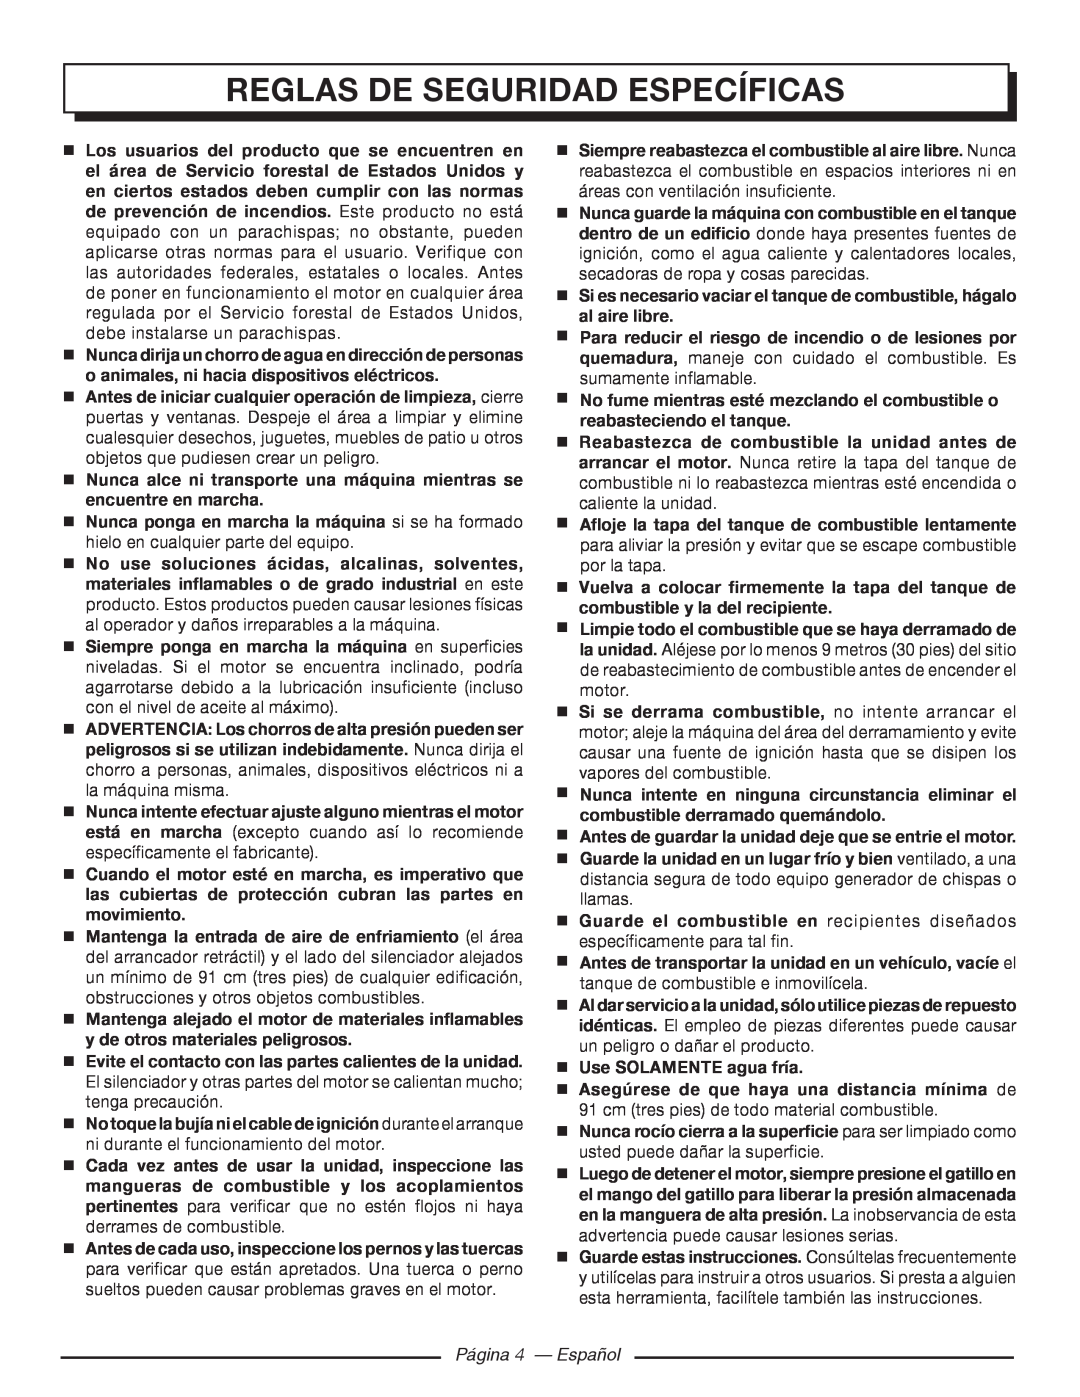 Homelite UT80977, UT80546 manuel dutilisation Página 4 - Español, Reglas De Seguridad Específicas 